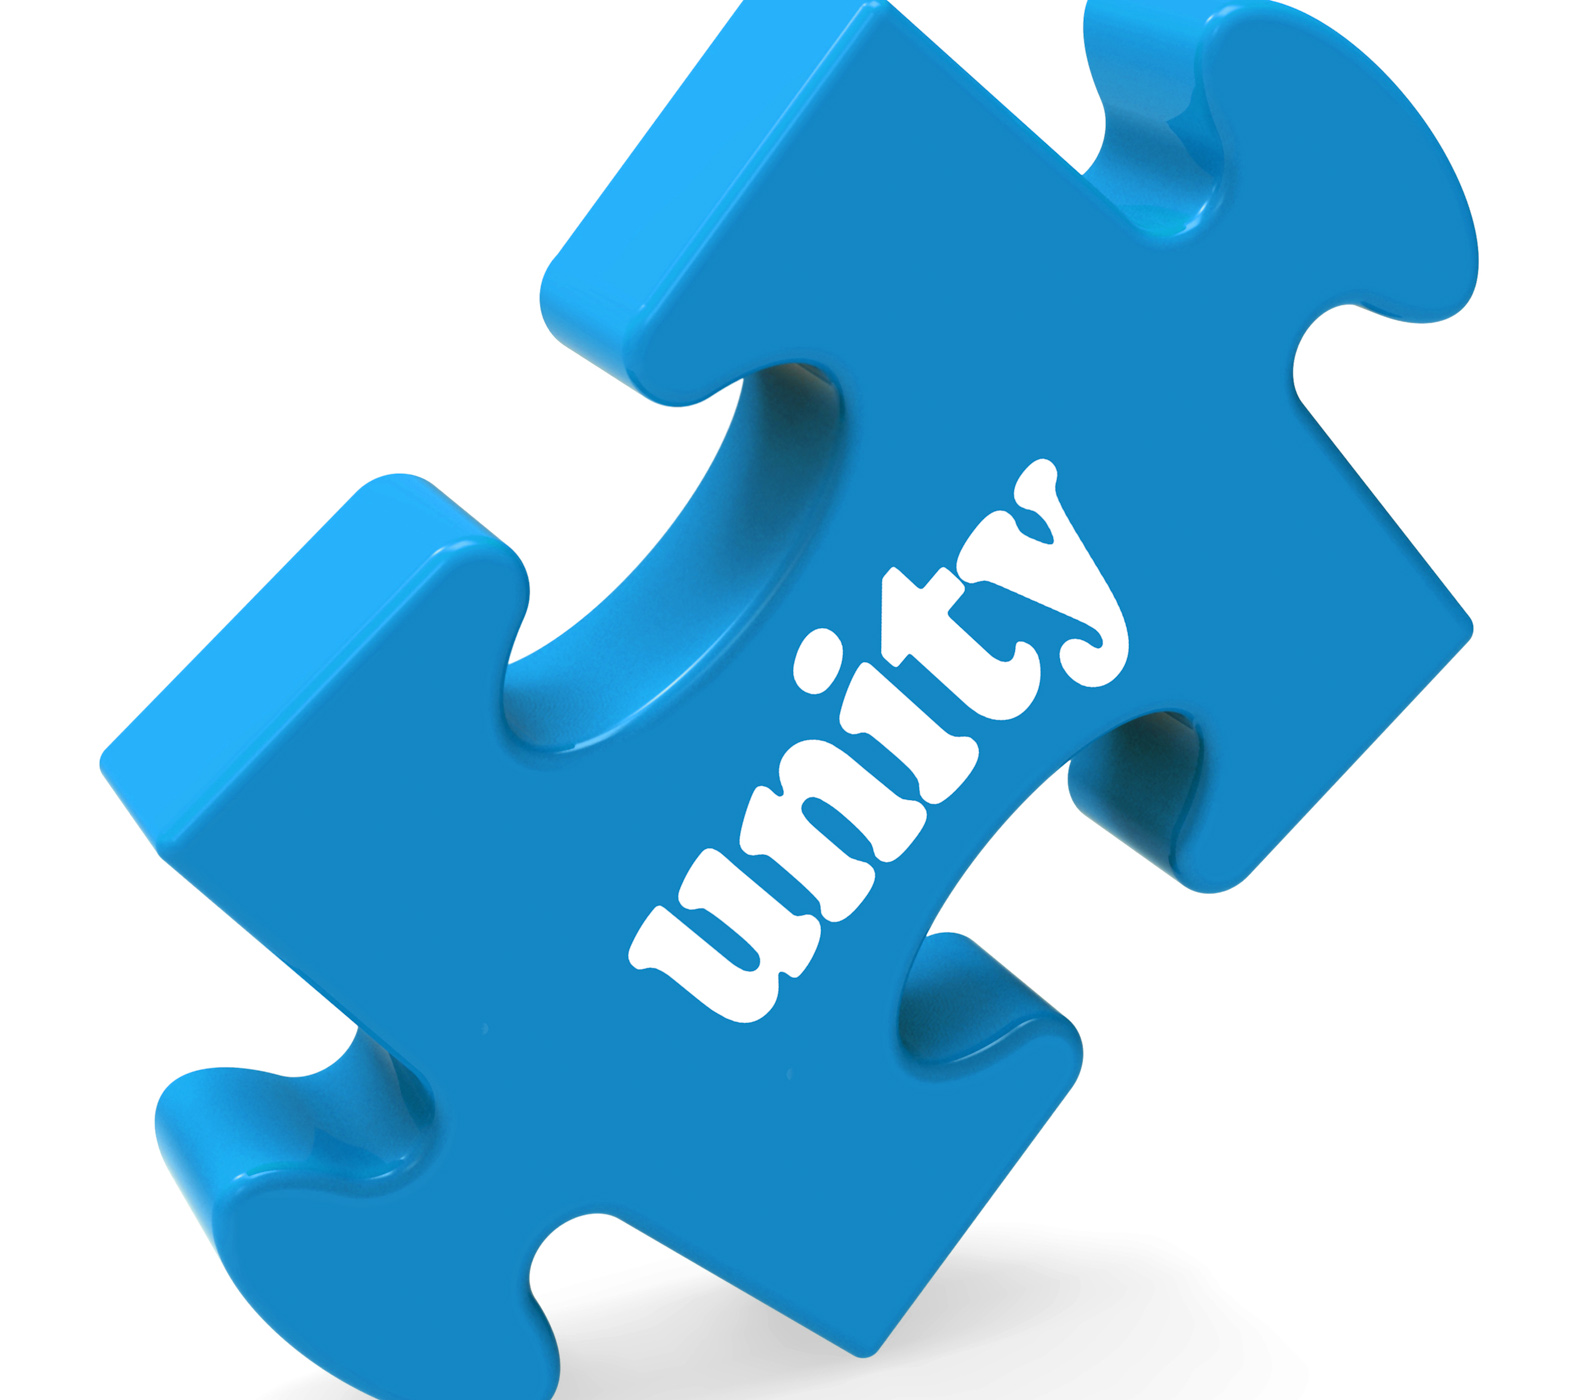 Unity shows partner team teamwork or collaboration photo